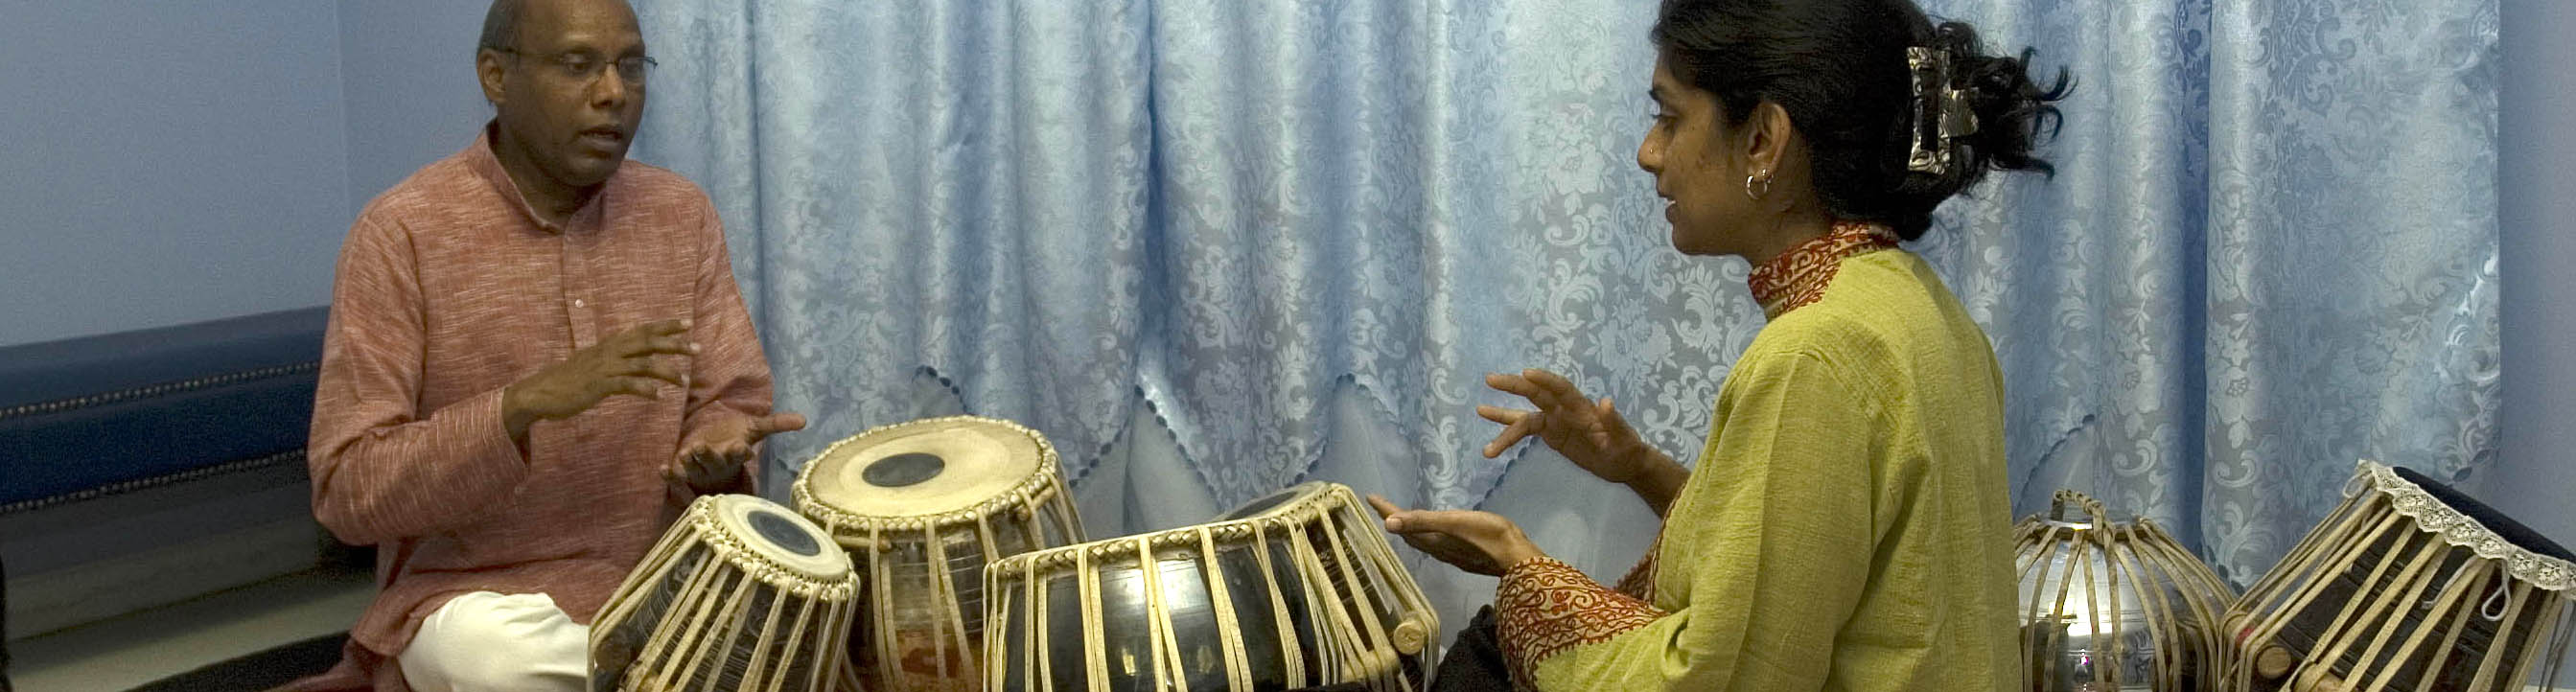 Chris Pereji playing tabla drums with apprentice Nisha Purushotham. Photo by Maggie Holtzberg.